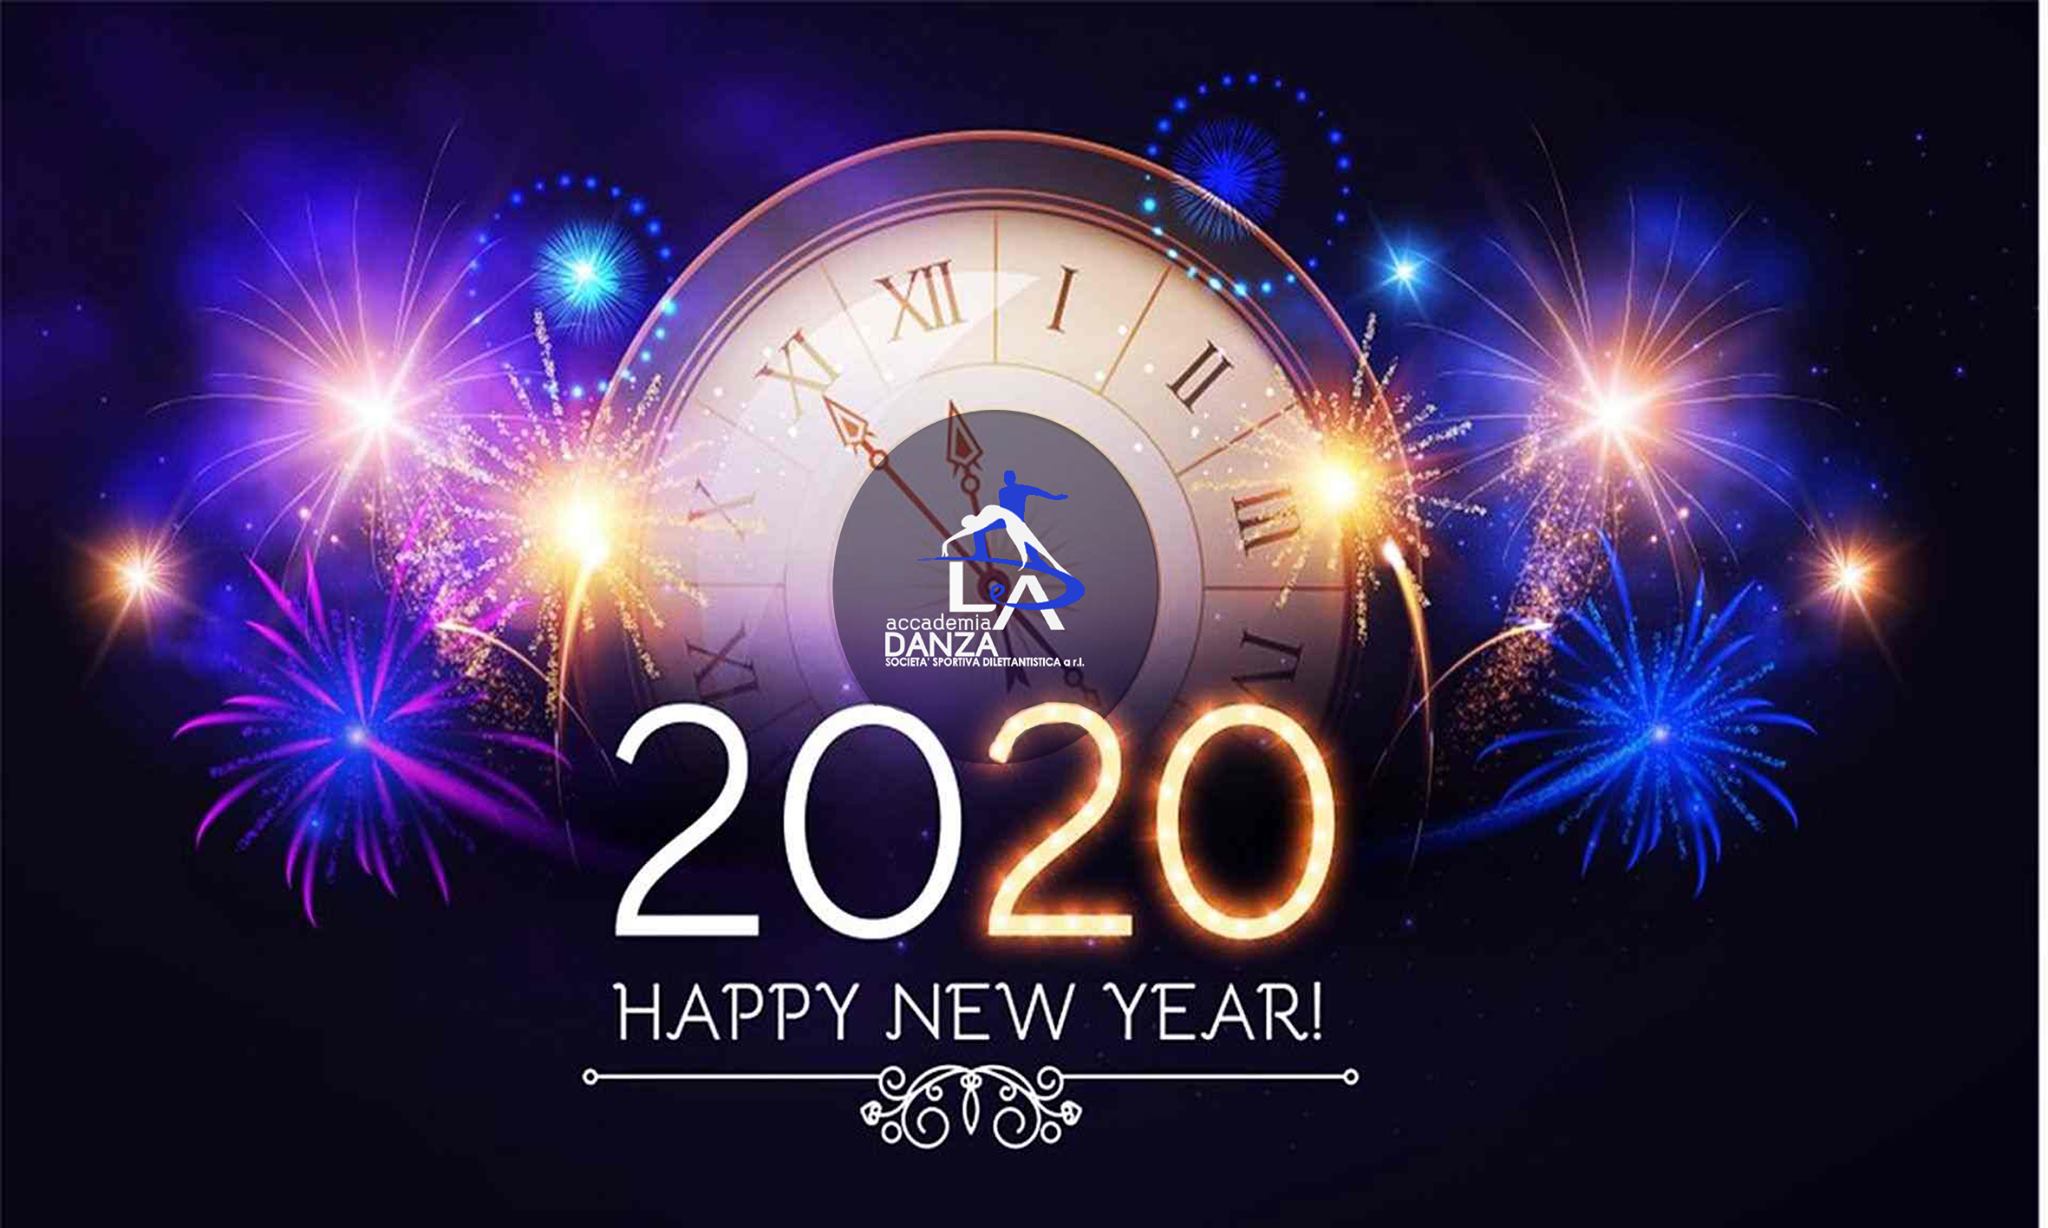 17 апреля 2020 год. Новый год 2020 год. Happy New year картинки. Happy New year 2020. C yjdsv 2020 ujjv.